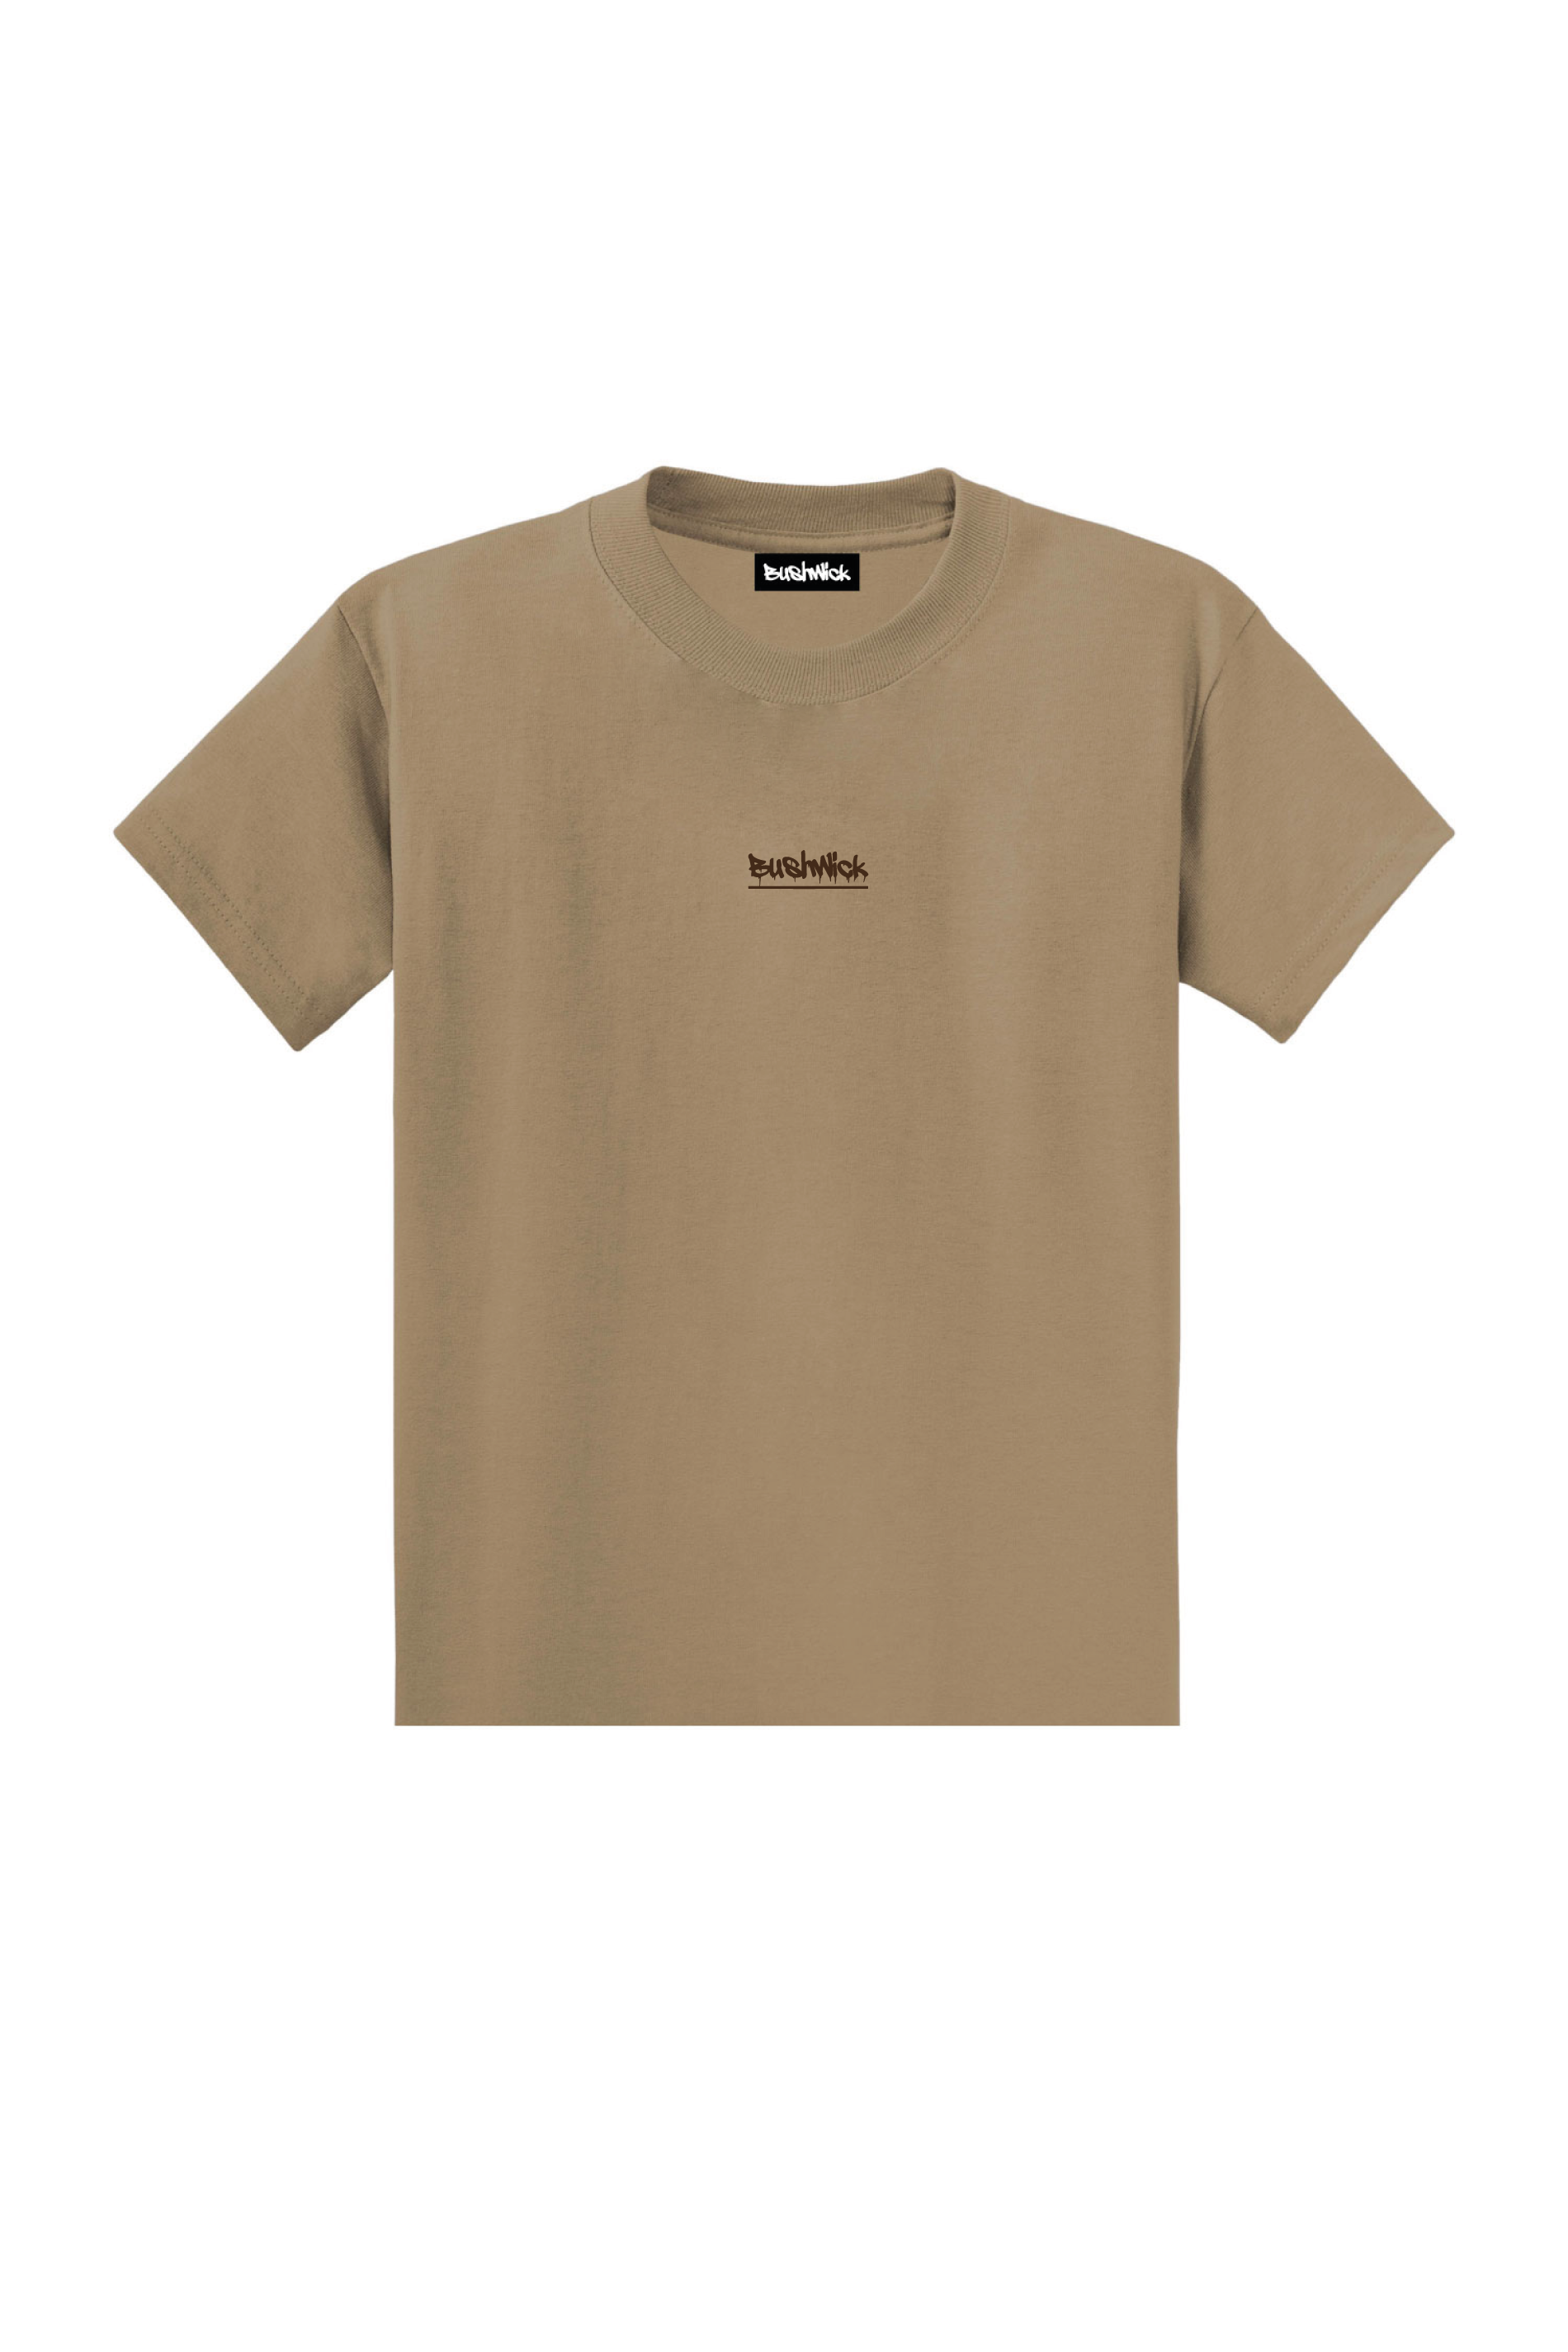 Bushwick T-Shirt uomo Essential